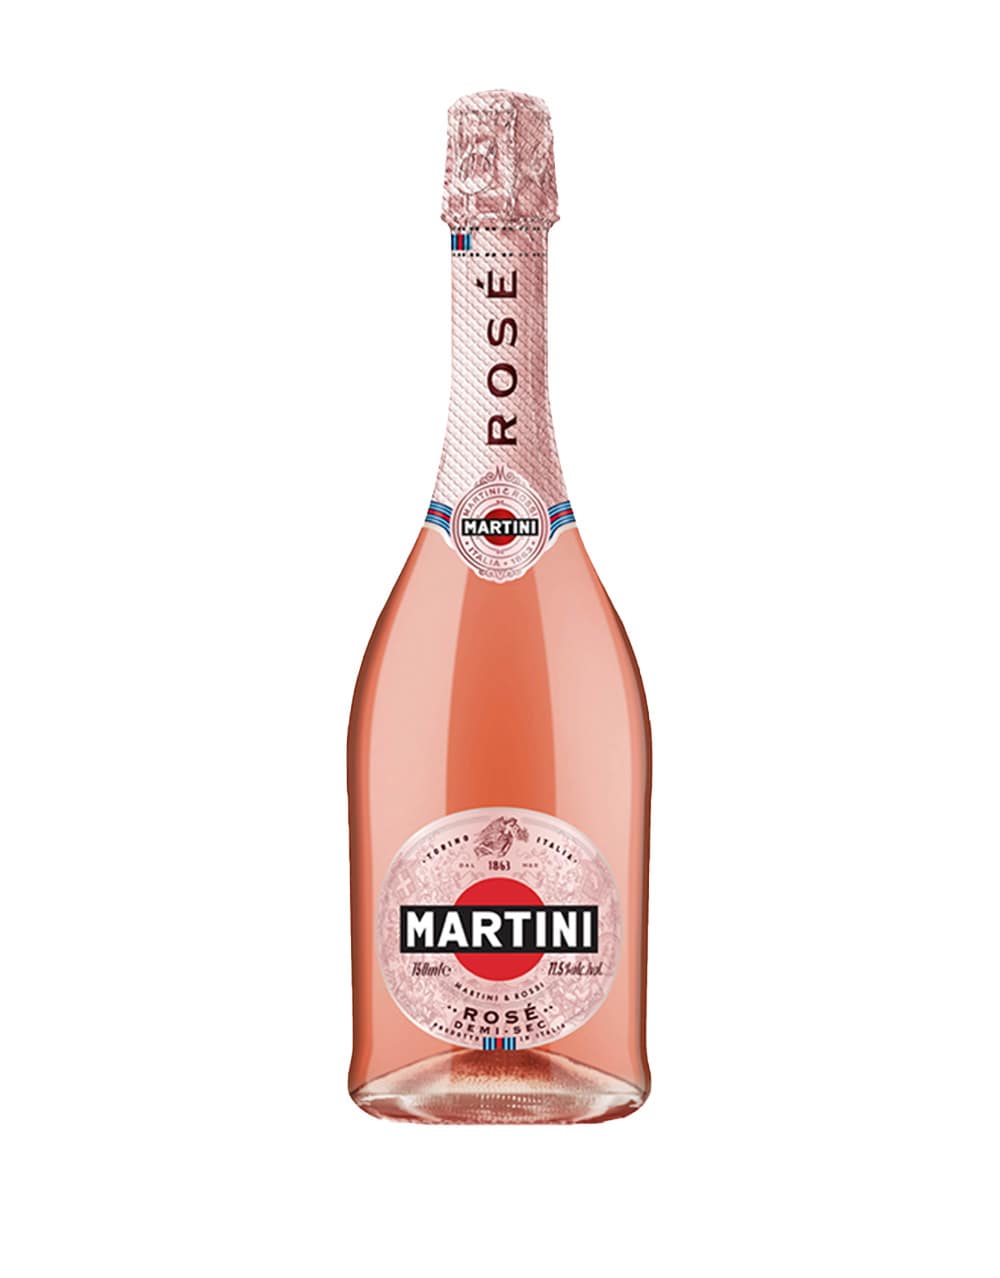 Martini Rose Italy Sparkling Rose wine